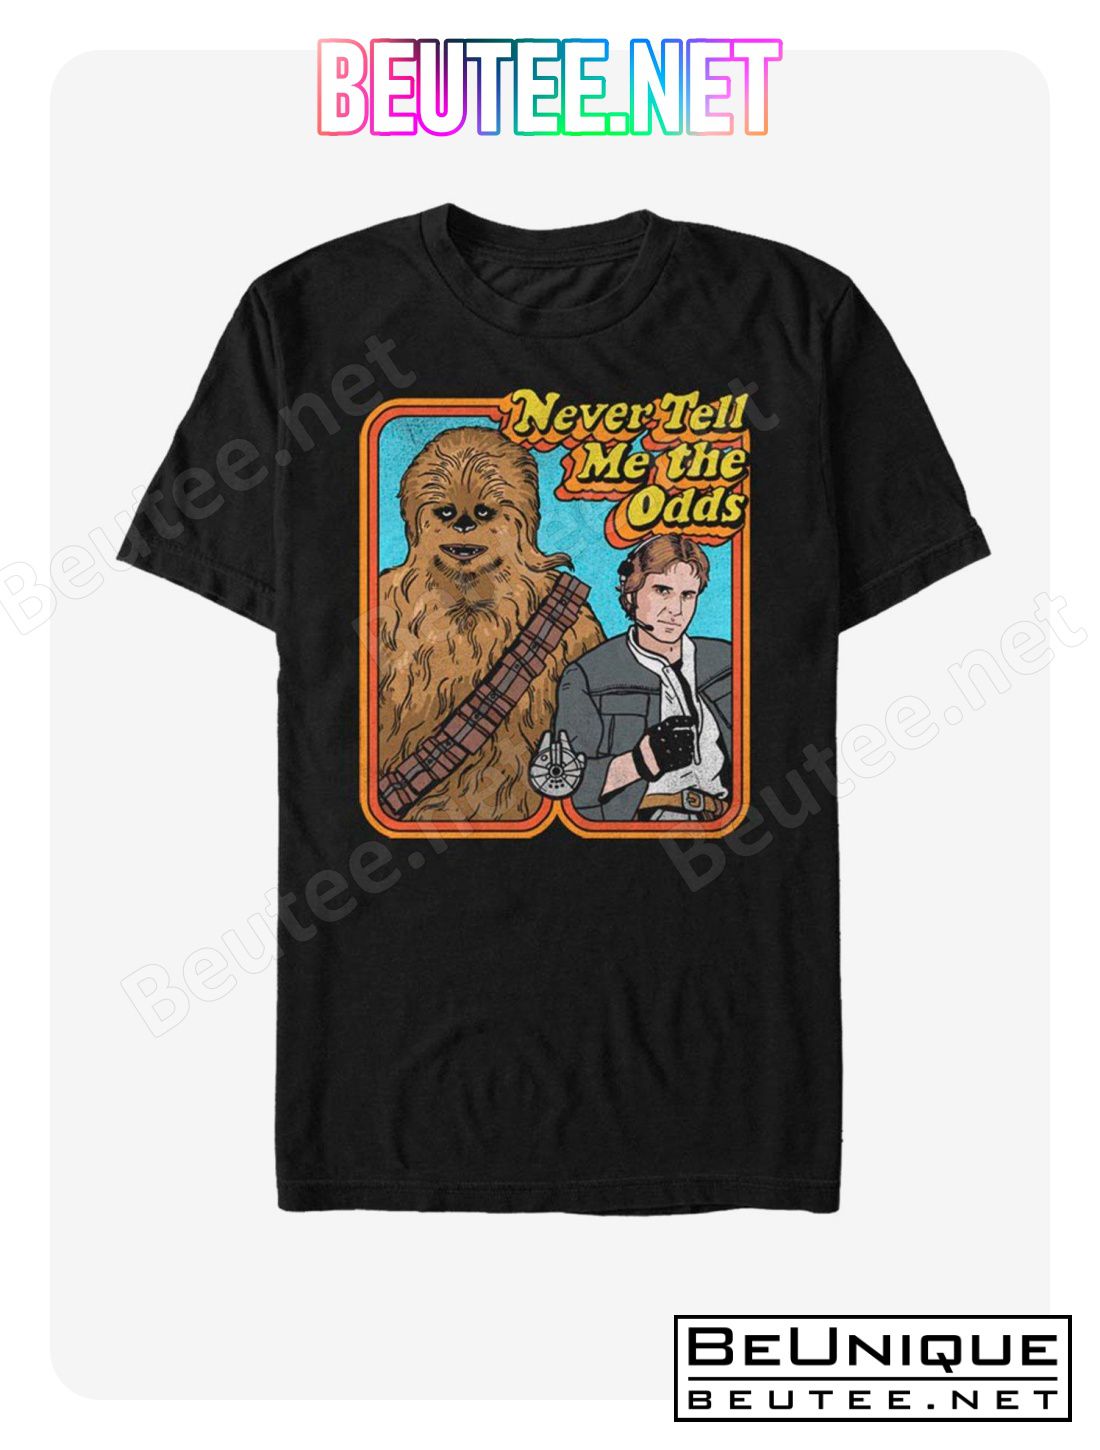 Star Wars The Cockpit T-Shirt